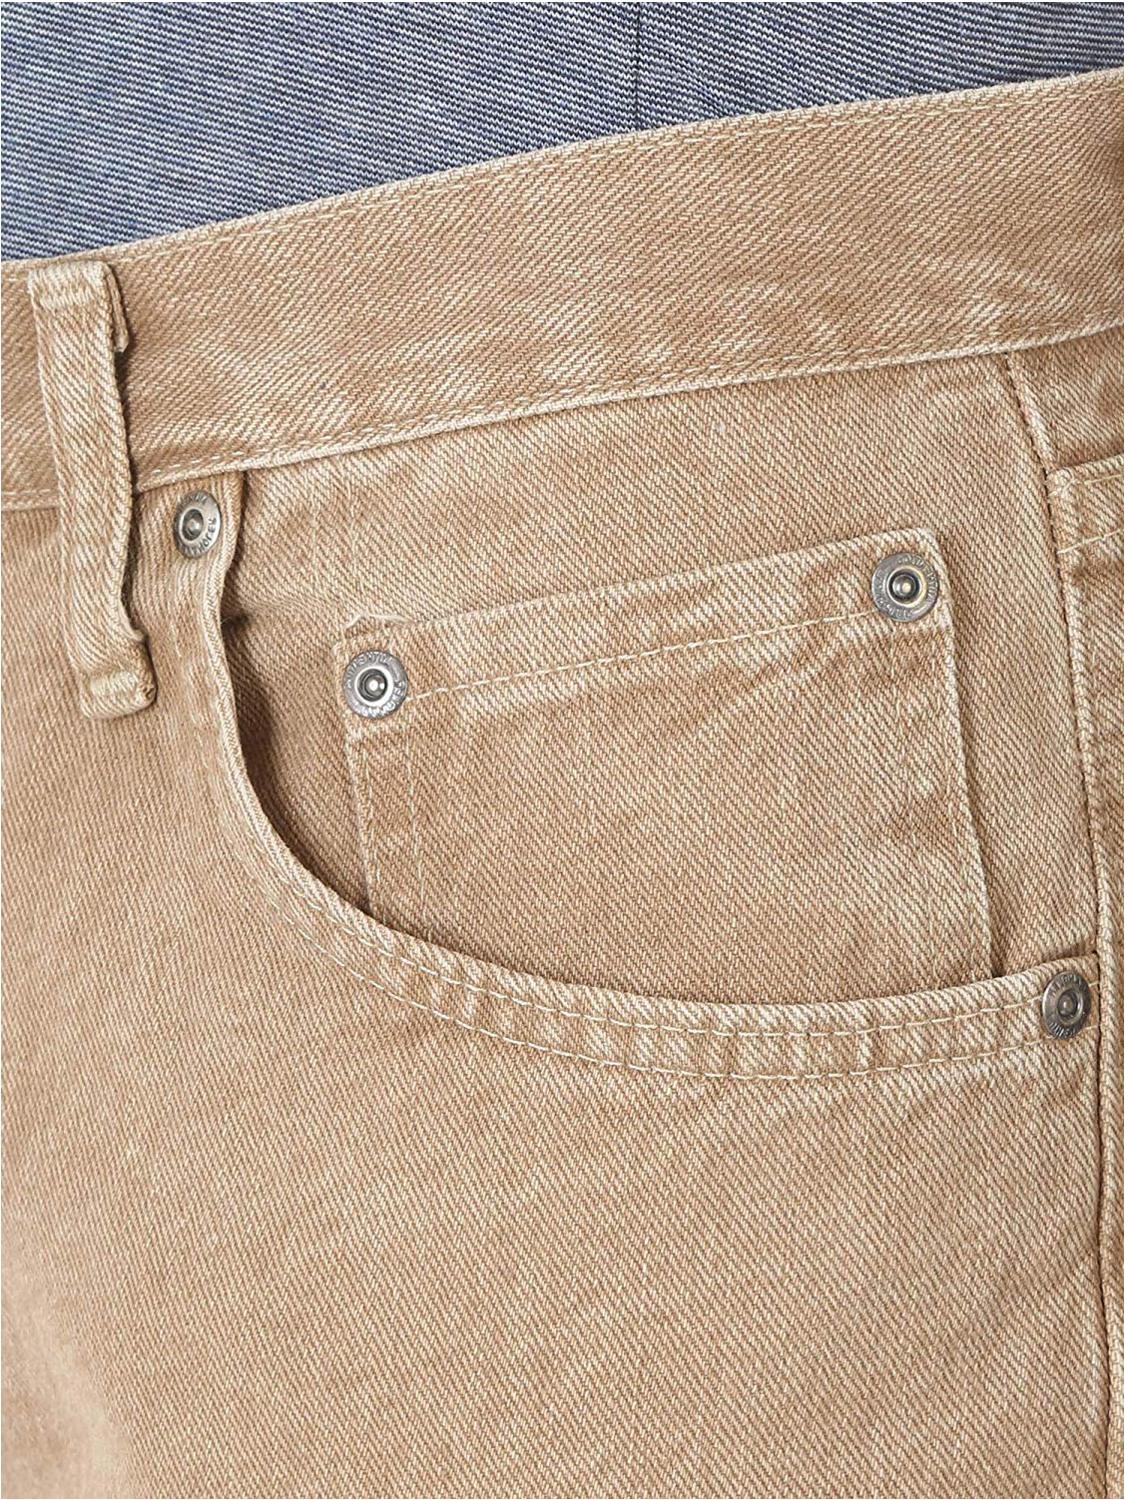 Wrangler Authentics Men's Classic 5-Pocket Regular Fit, Khaki, Size 36W ...